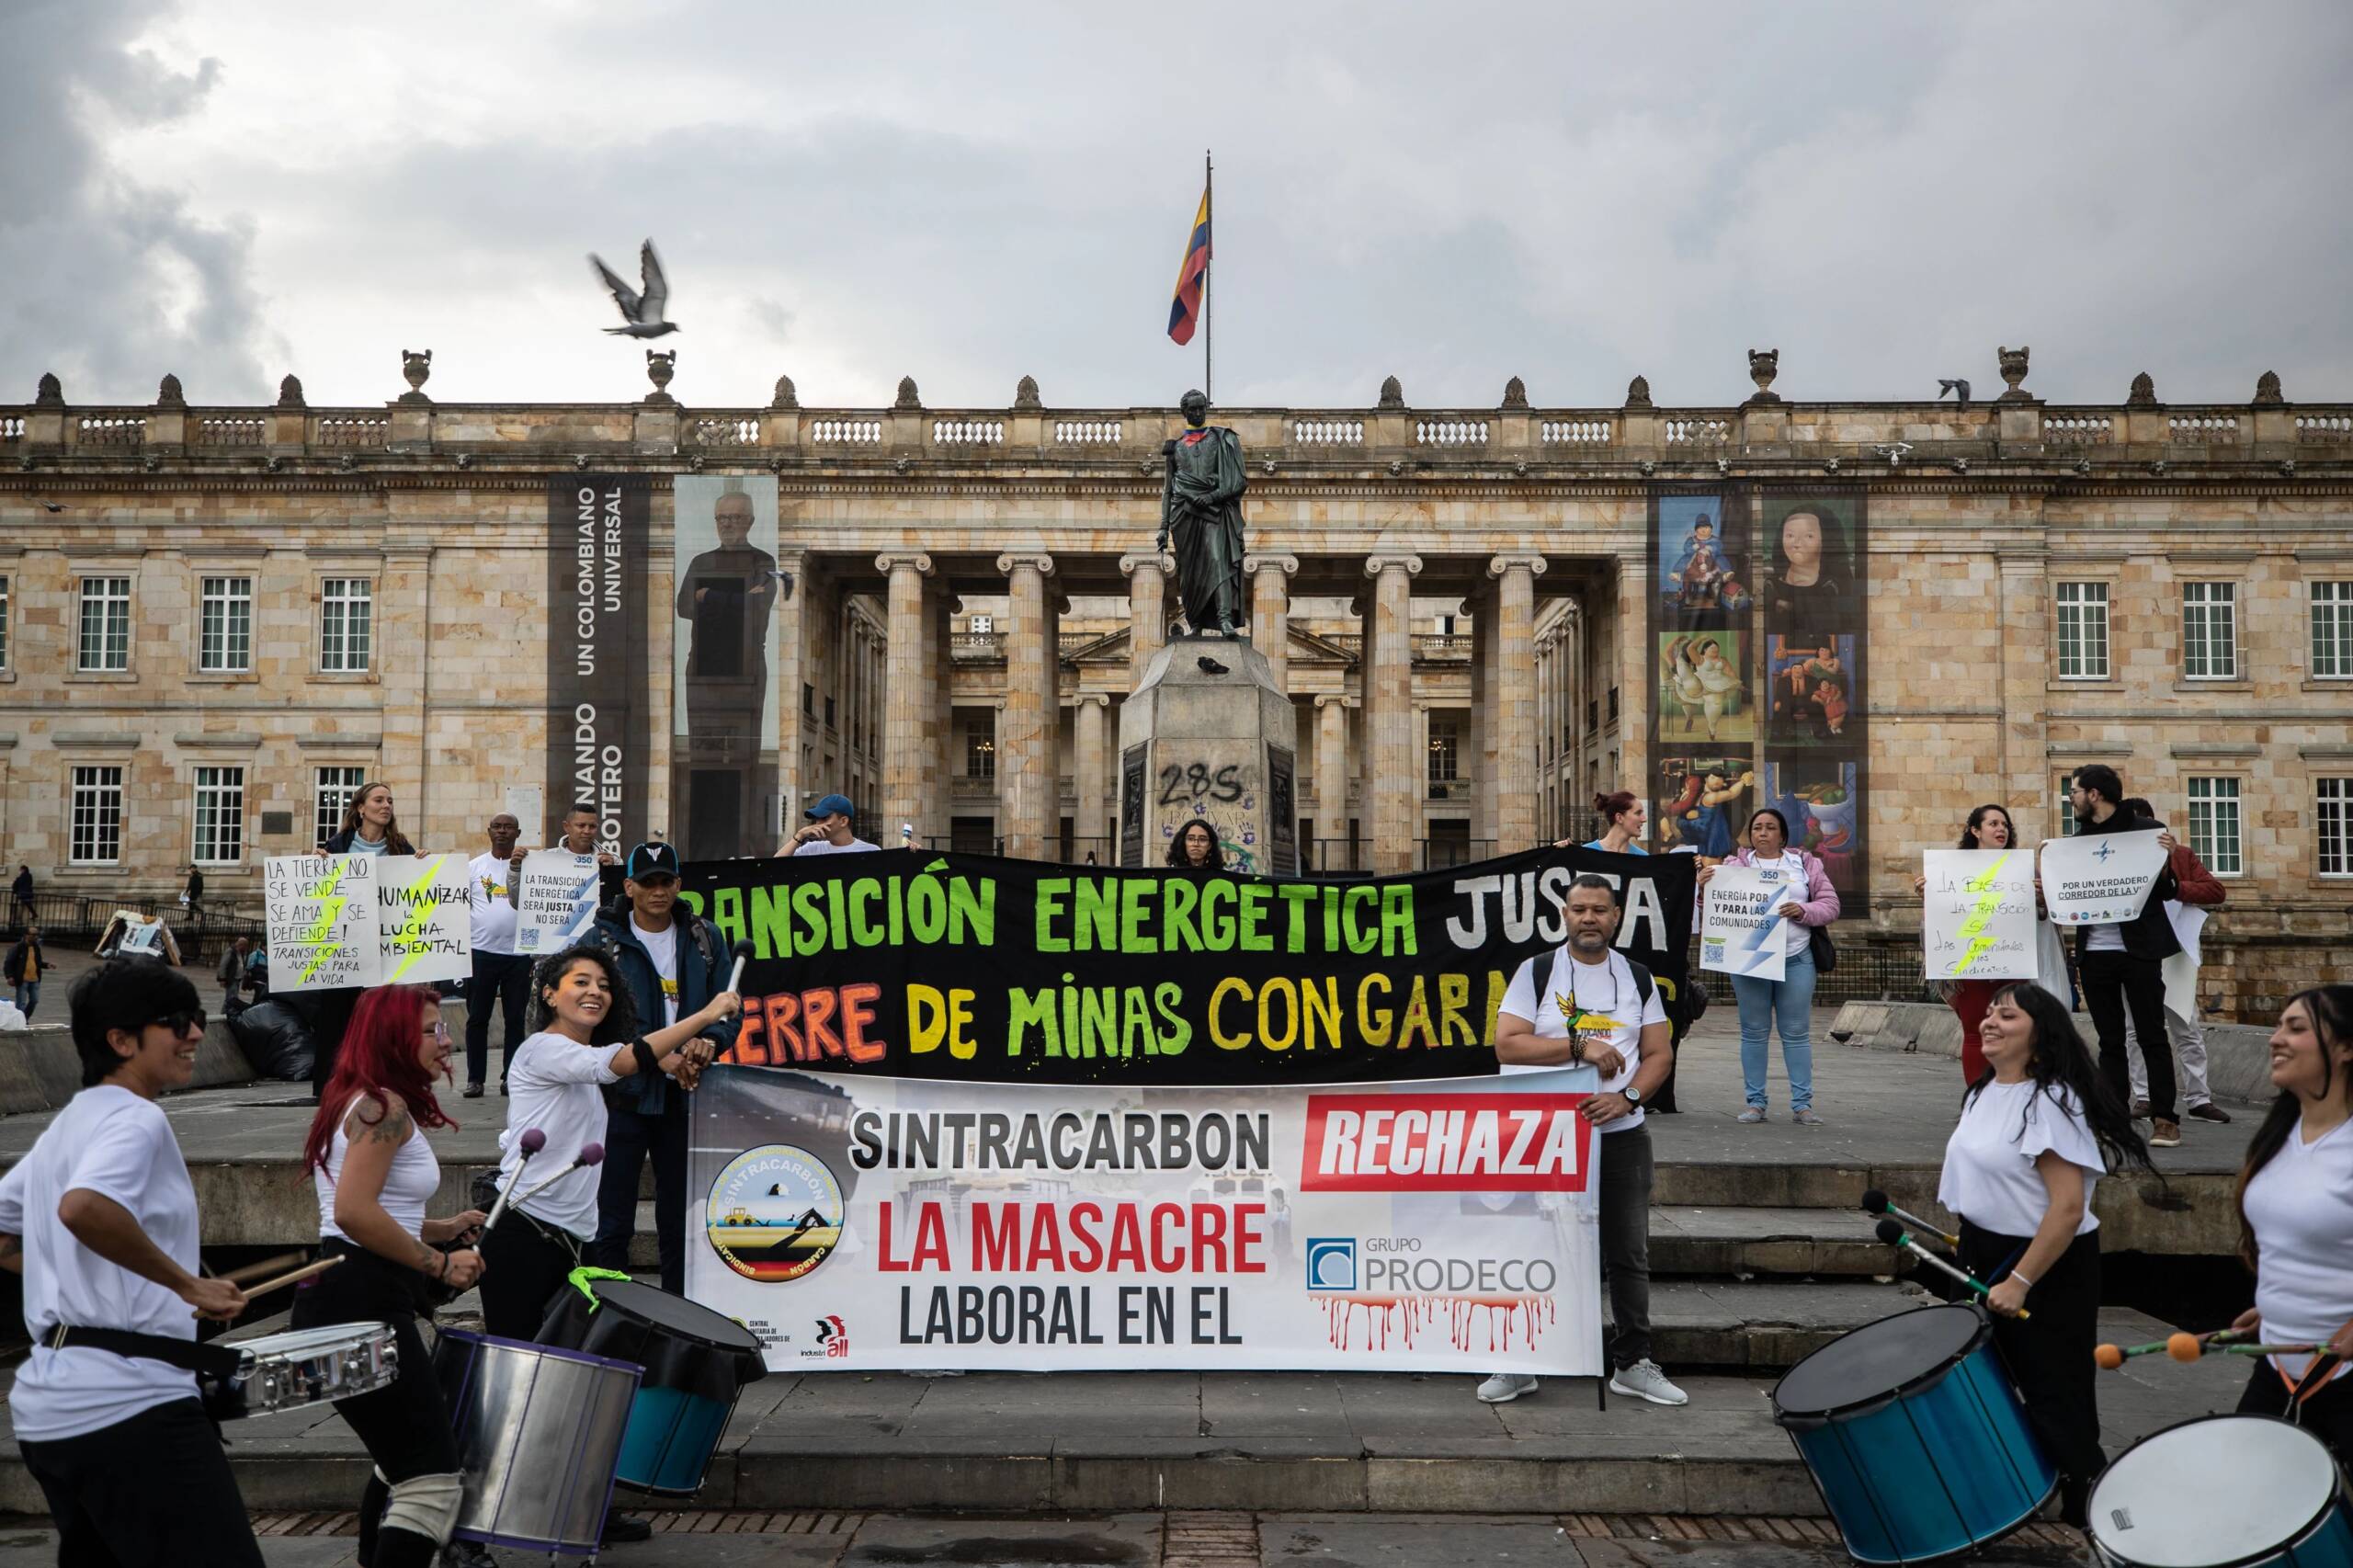 Bogotá, Kolombia, 3 November: masyarakat menghadiri audiensi terbuka, mengadakan protes di Plaza de Bolivar dan menyerukan penutupan tambang batu bara terbuka Glencore dan transisi energi yang adil bagi semua. Kredit foto: Iván Valencia